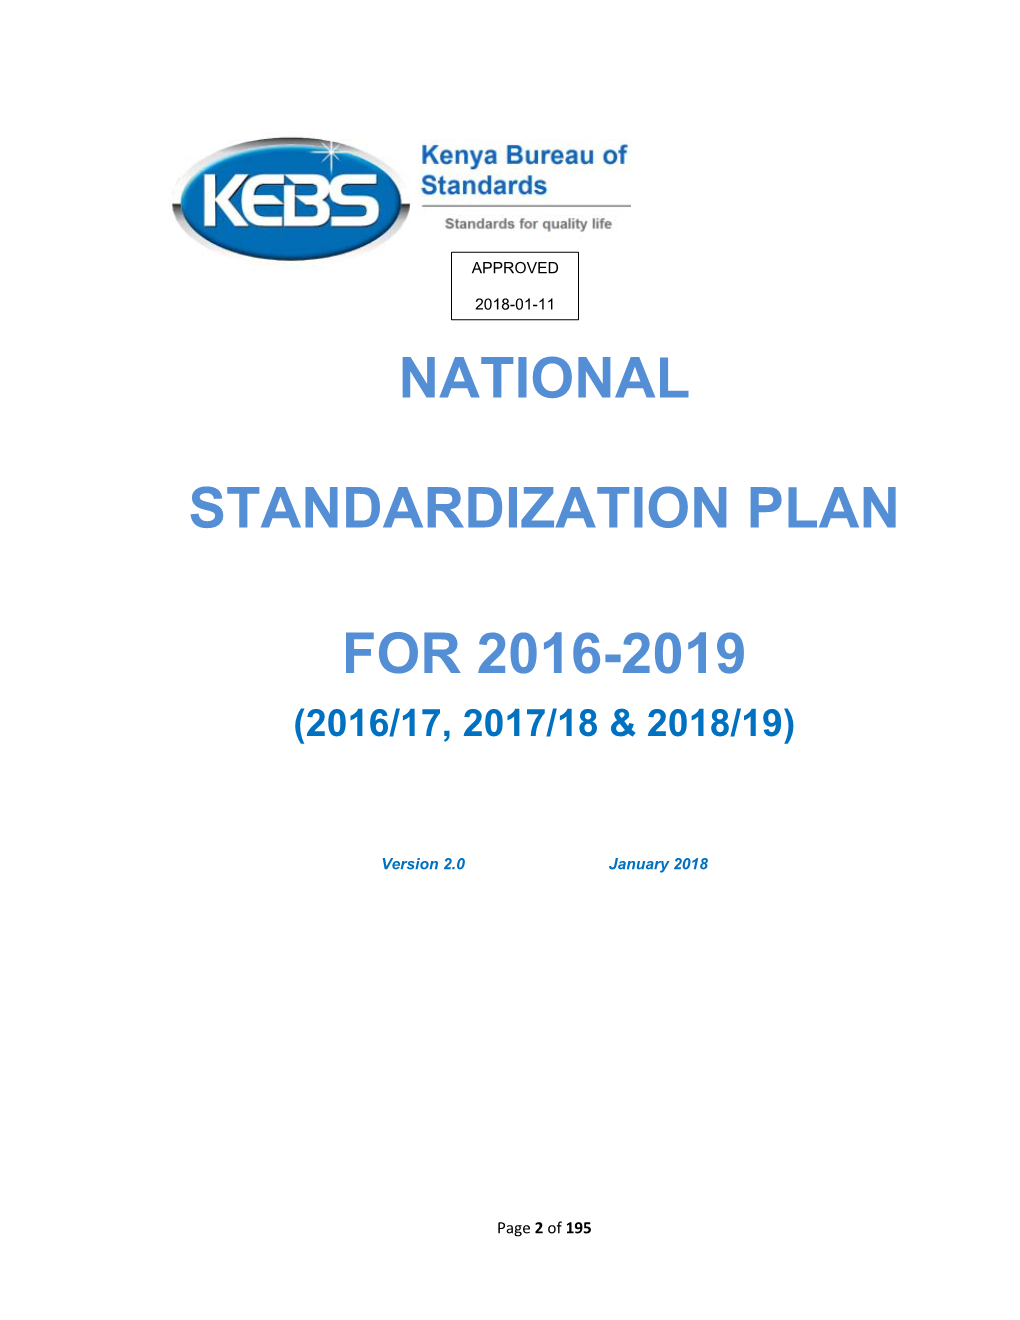 National Standardization Plan for 2016-2019